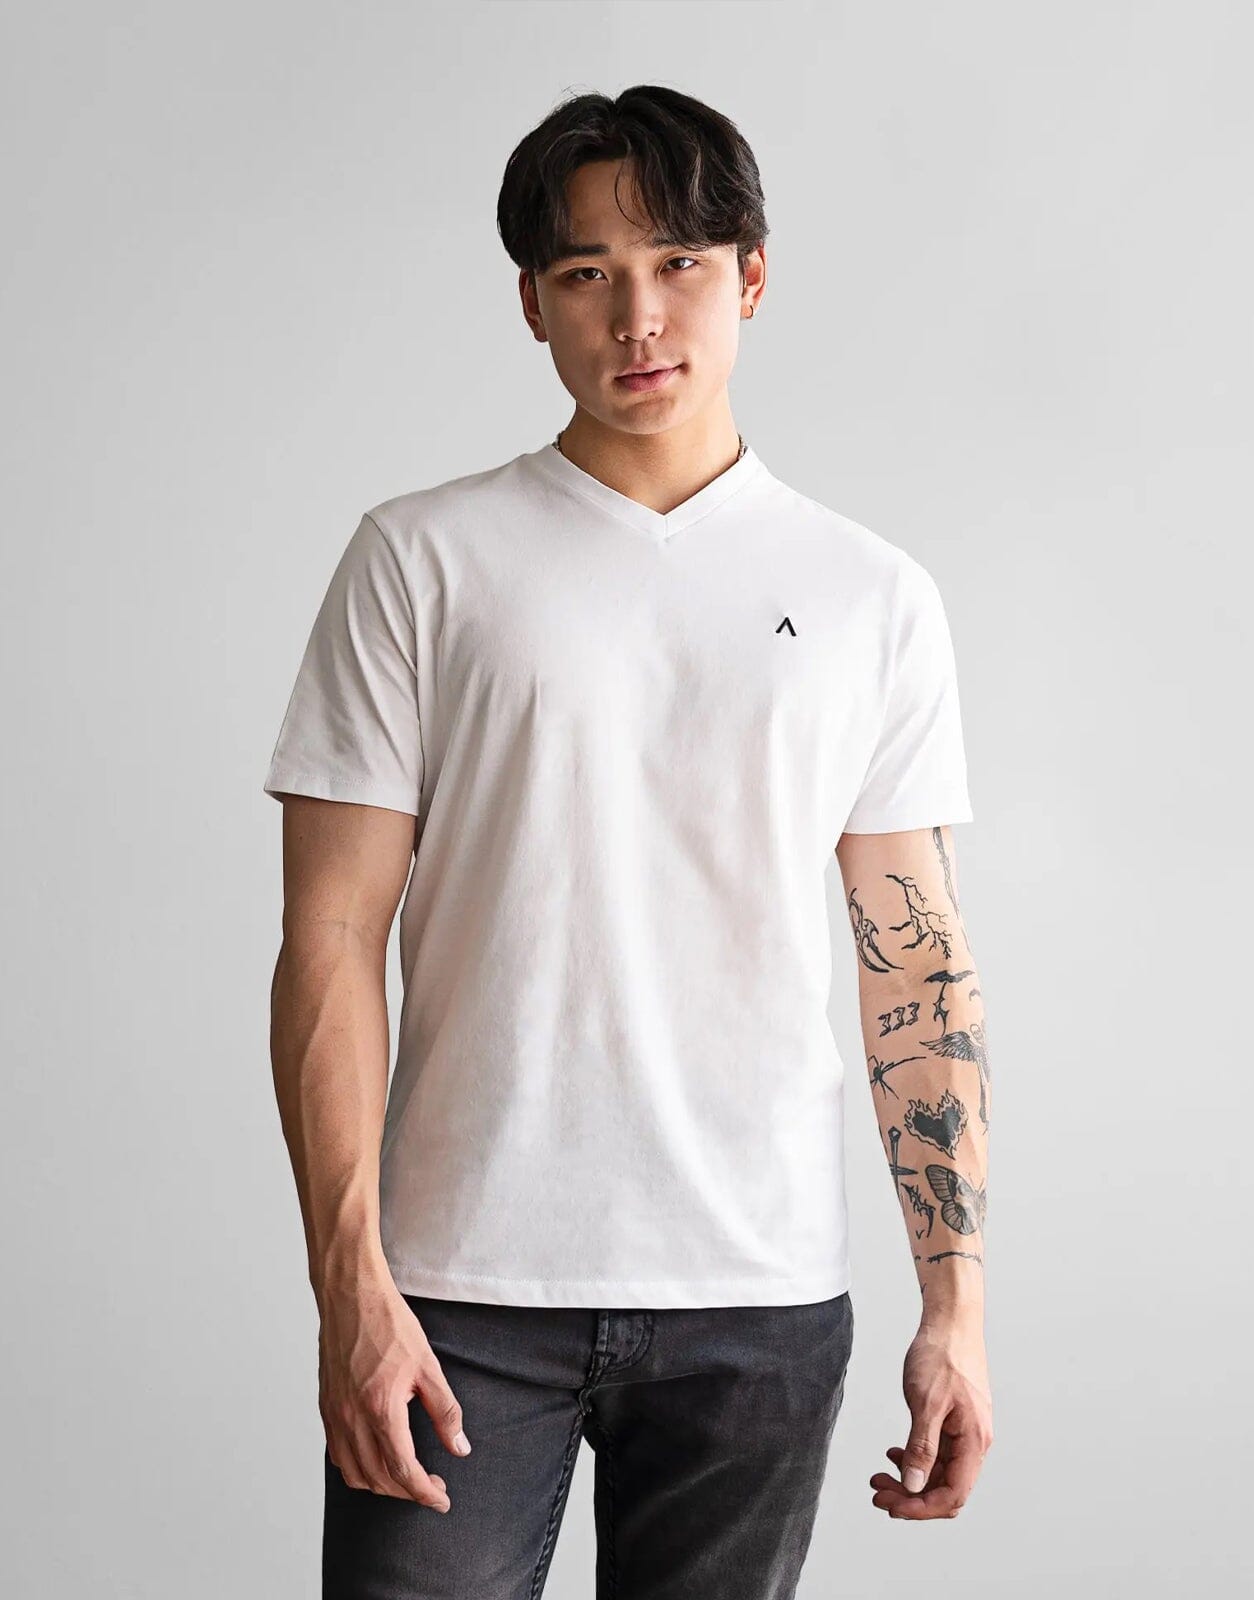 Fade Icon V-Neck White T-Shirt - Subwear